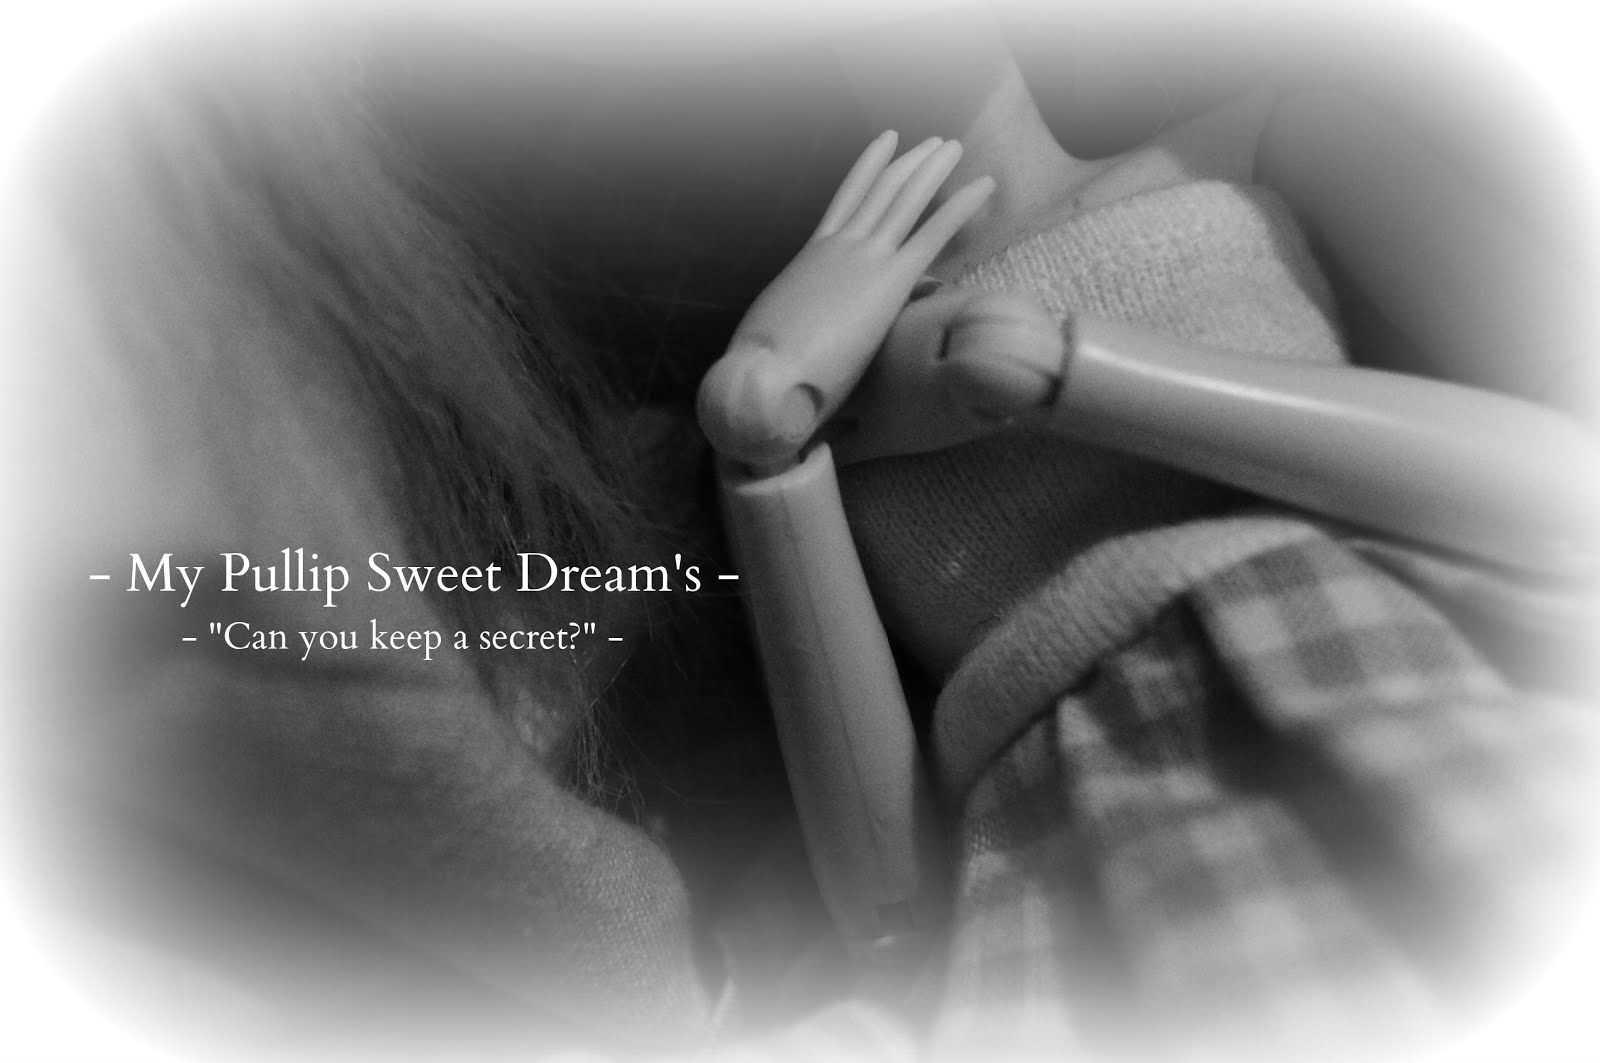 - My Pullip Sweet Dream's -